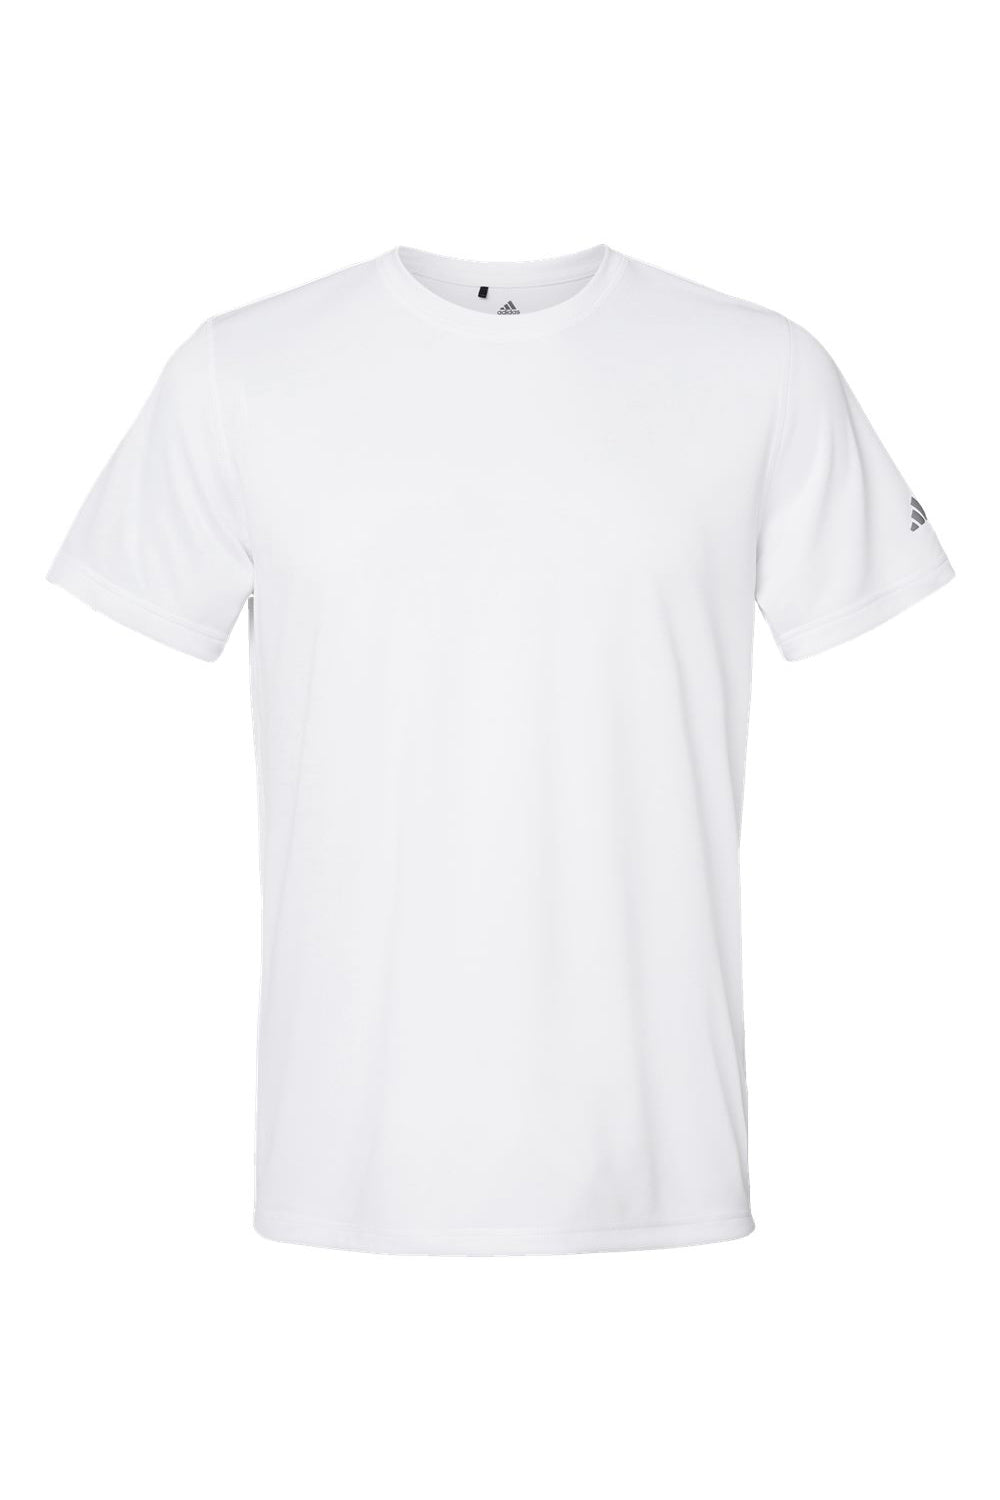 Adidas A376 Mens UPF 50+ Short Sleeve Crewneck T-Shirt White Flat Front